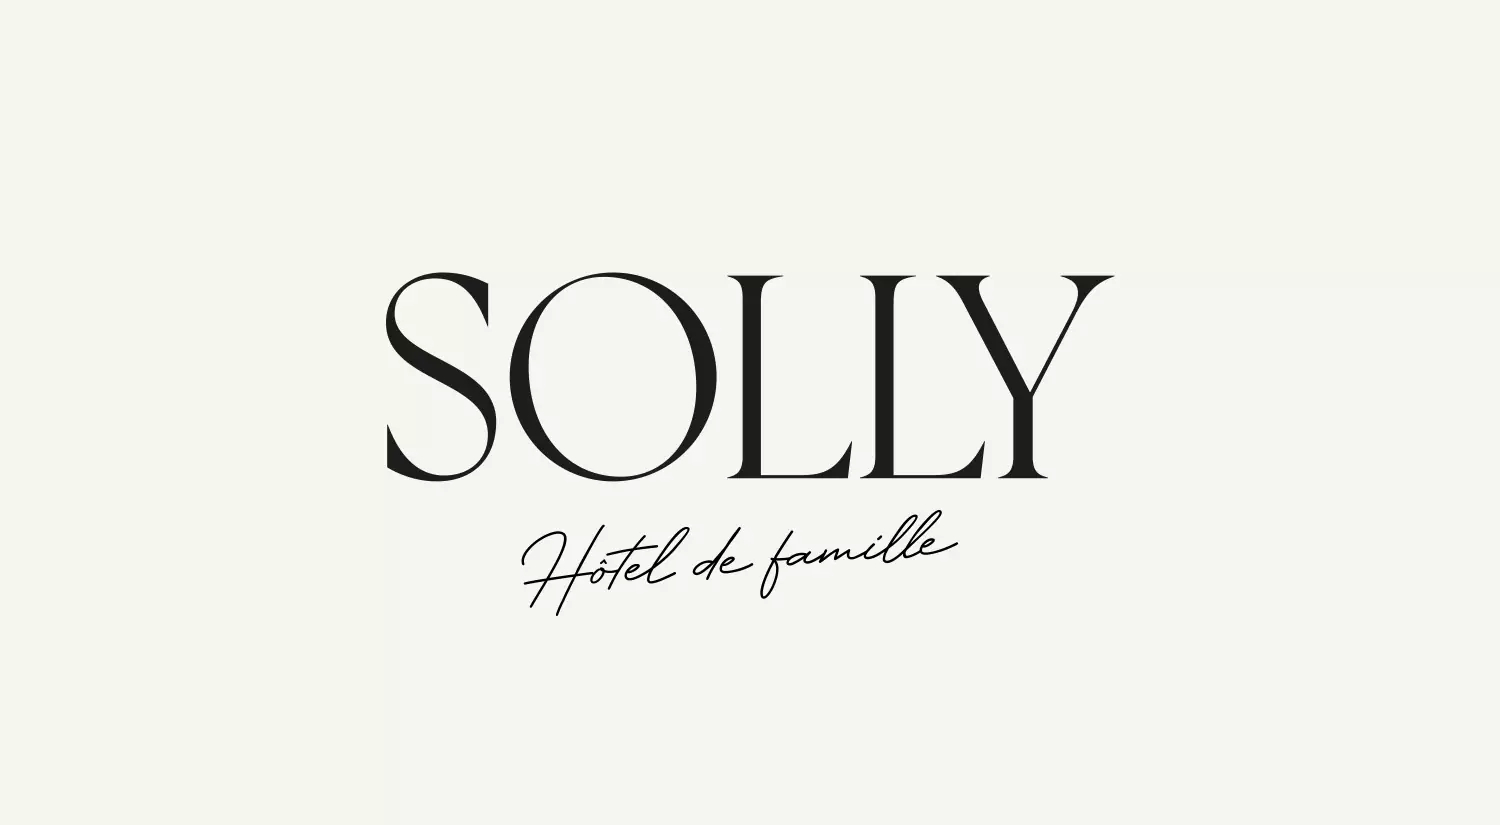 Solly酒店品牌视觉设计